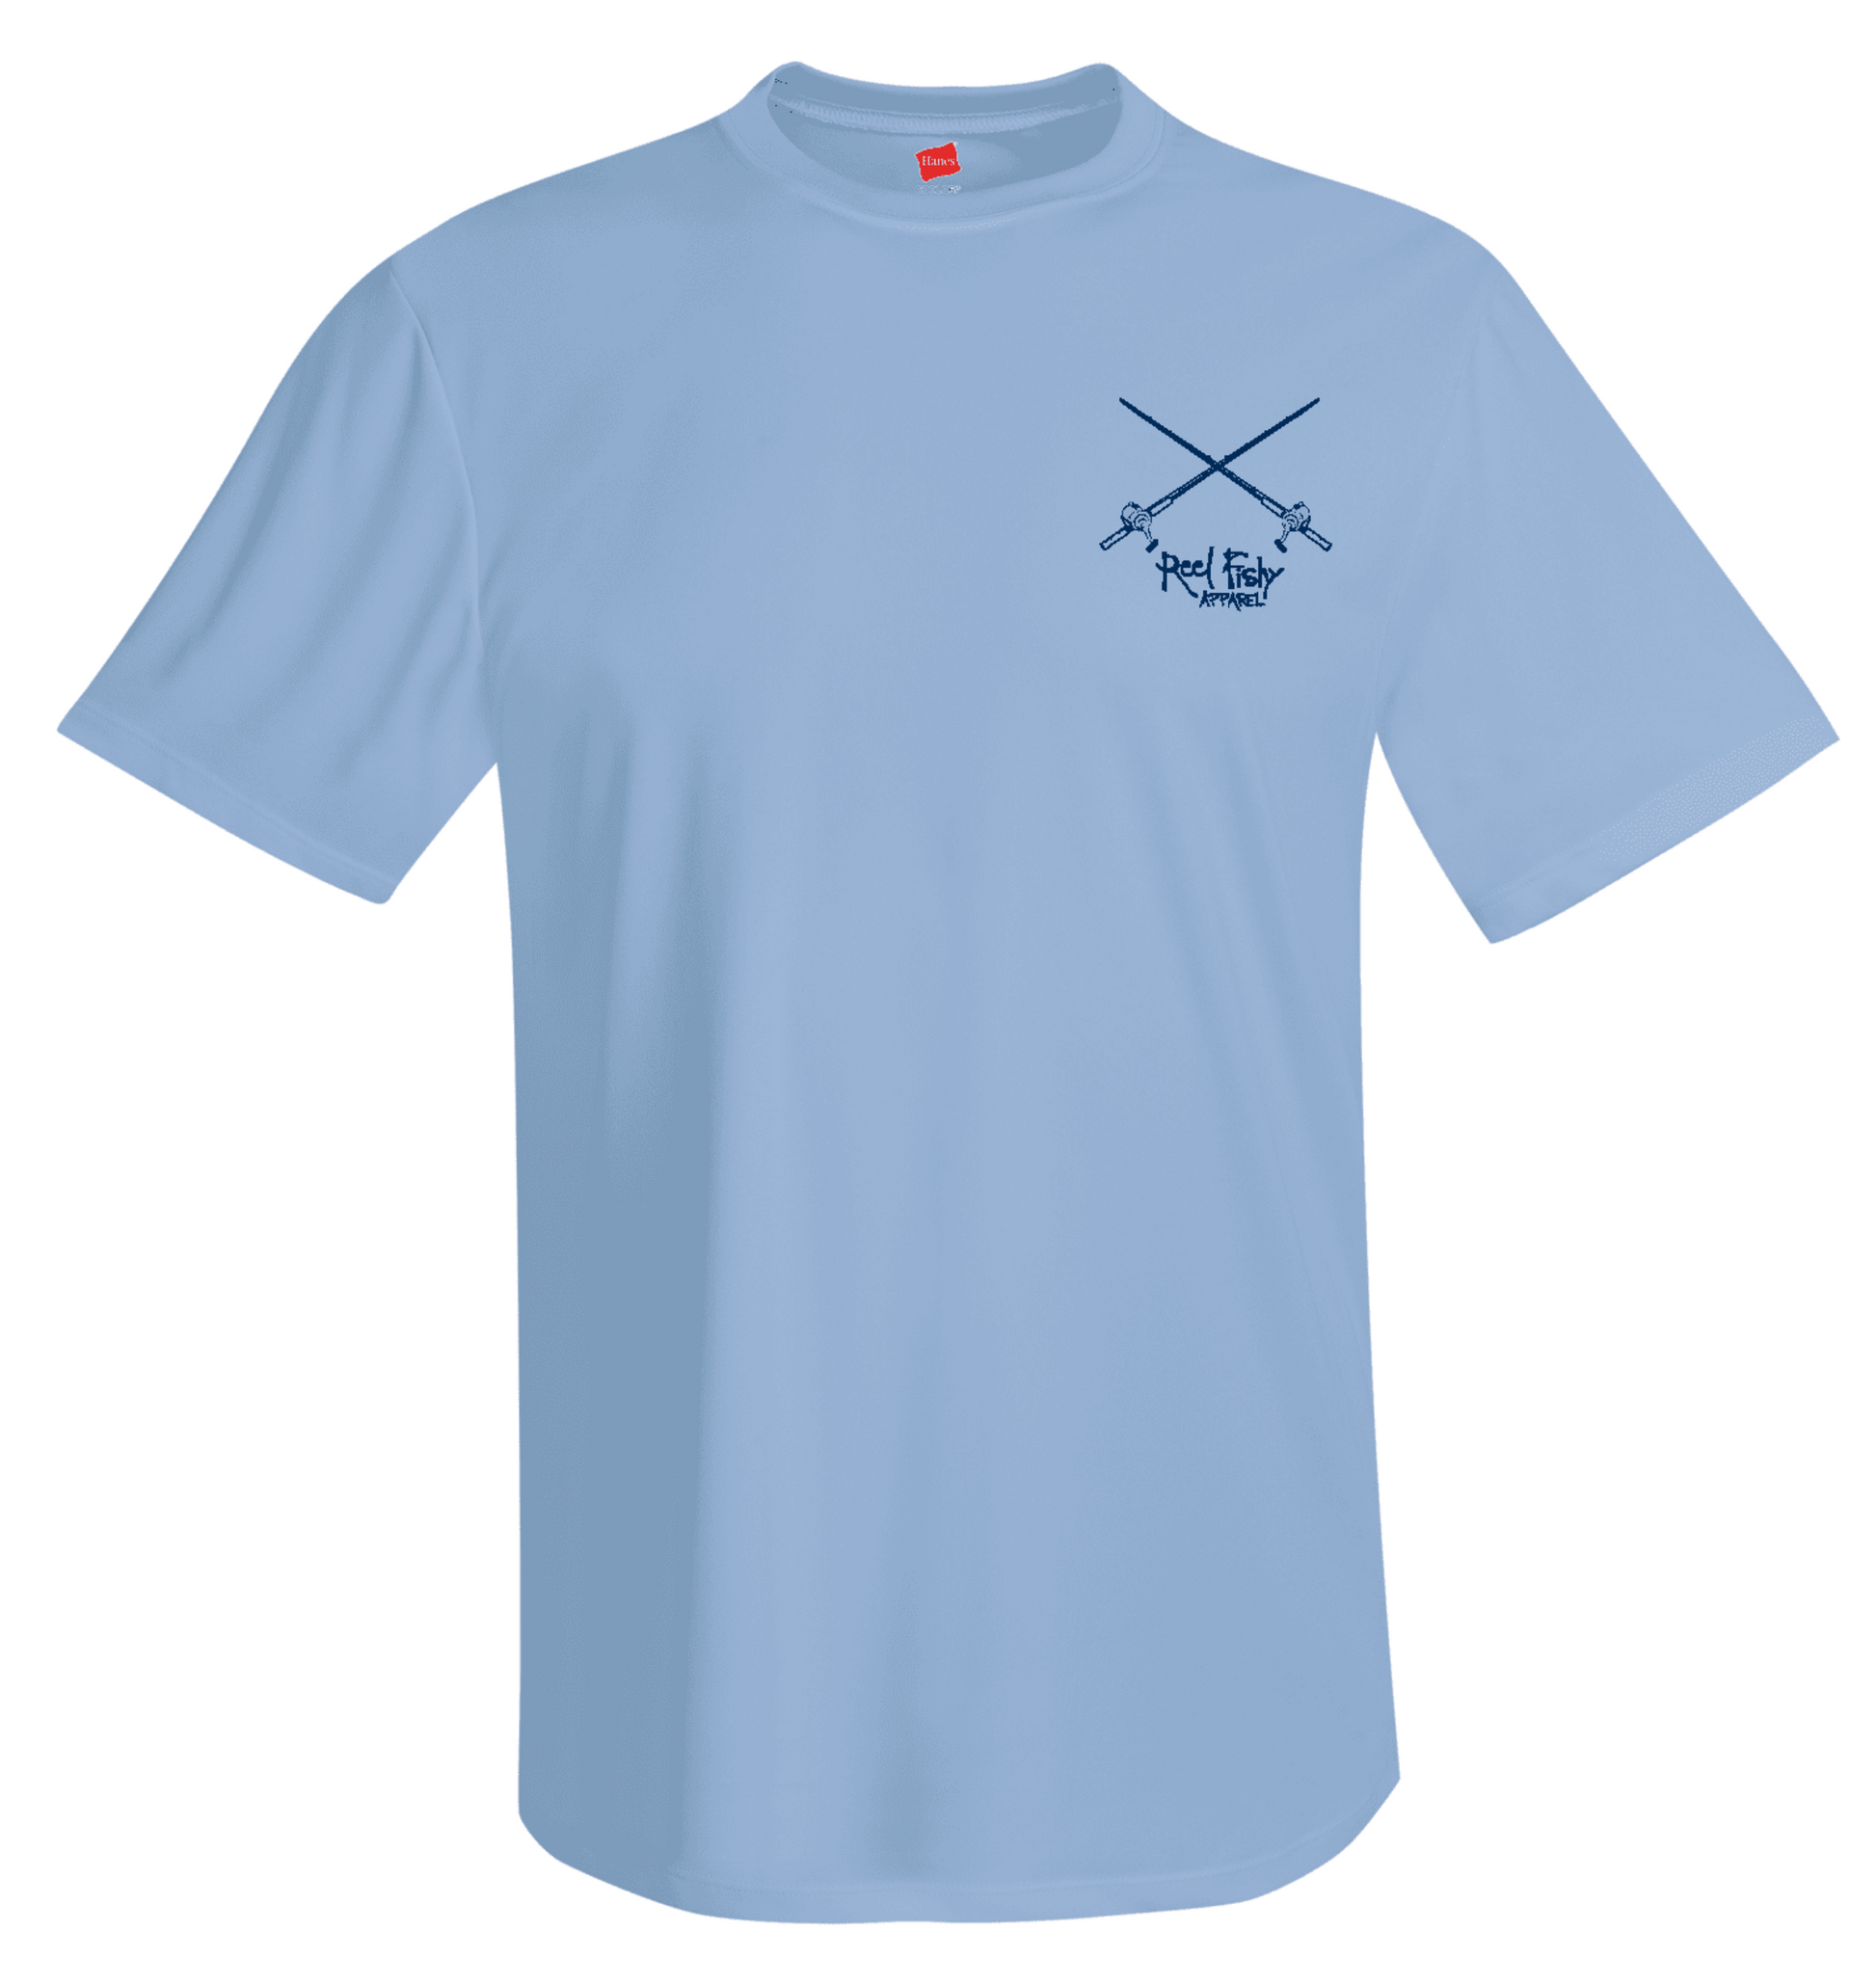 Mahi Fishing Performance Dry-Fit Short Sleeve Light Blue Shirt (Reel Fishy Apparel Salt Rods Logo on Front)